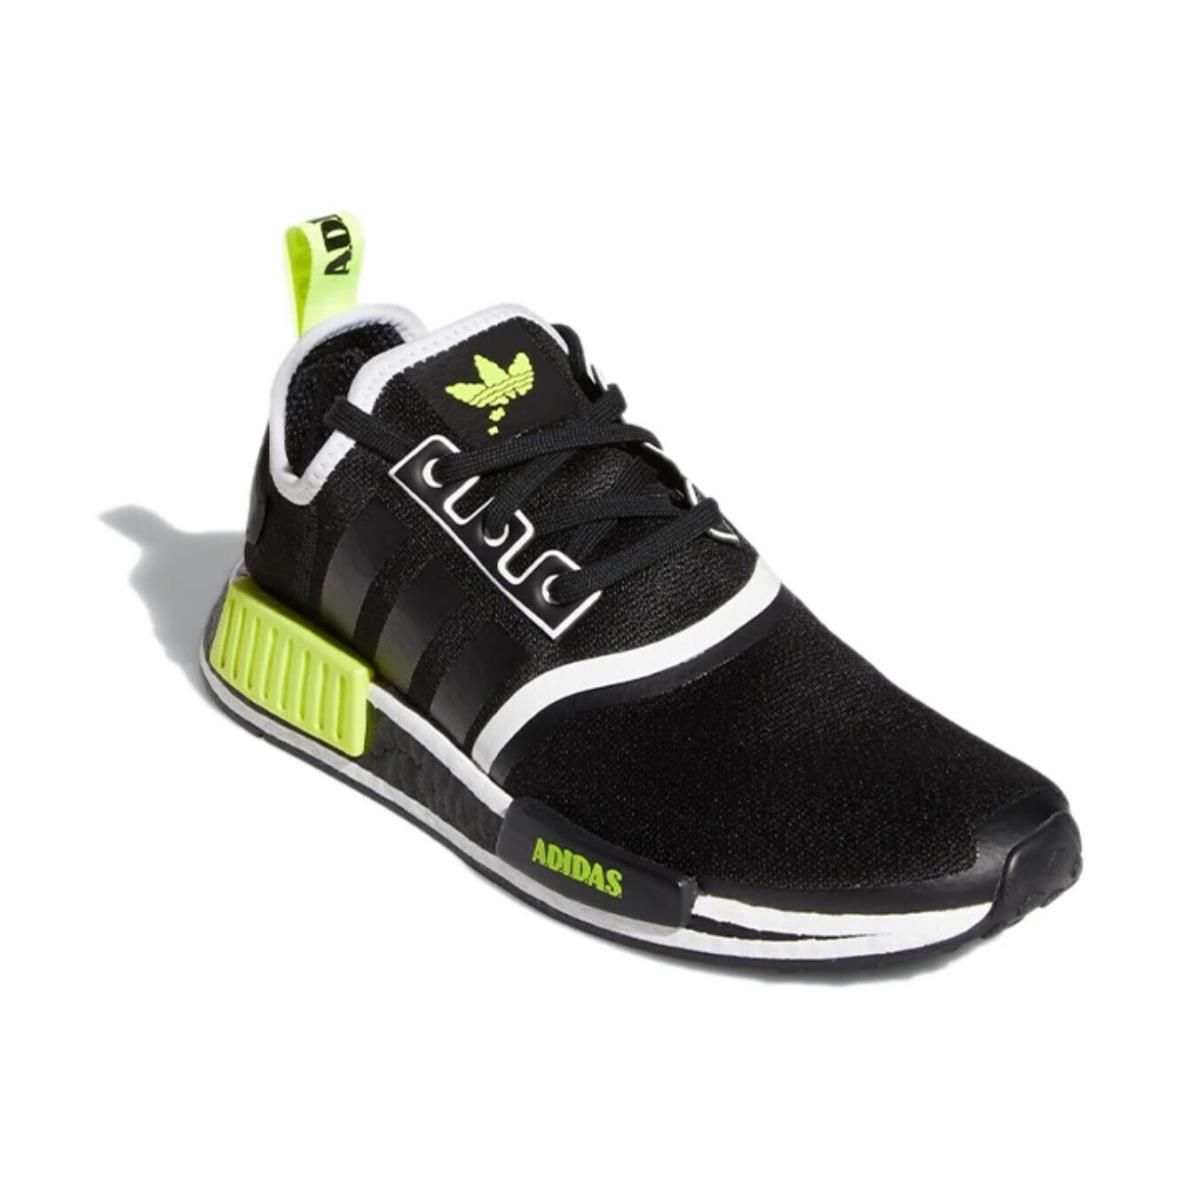 Mens Adidas Originals Nmd R1 Runner Running Shoes Size US 11 GV7183